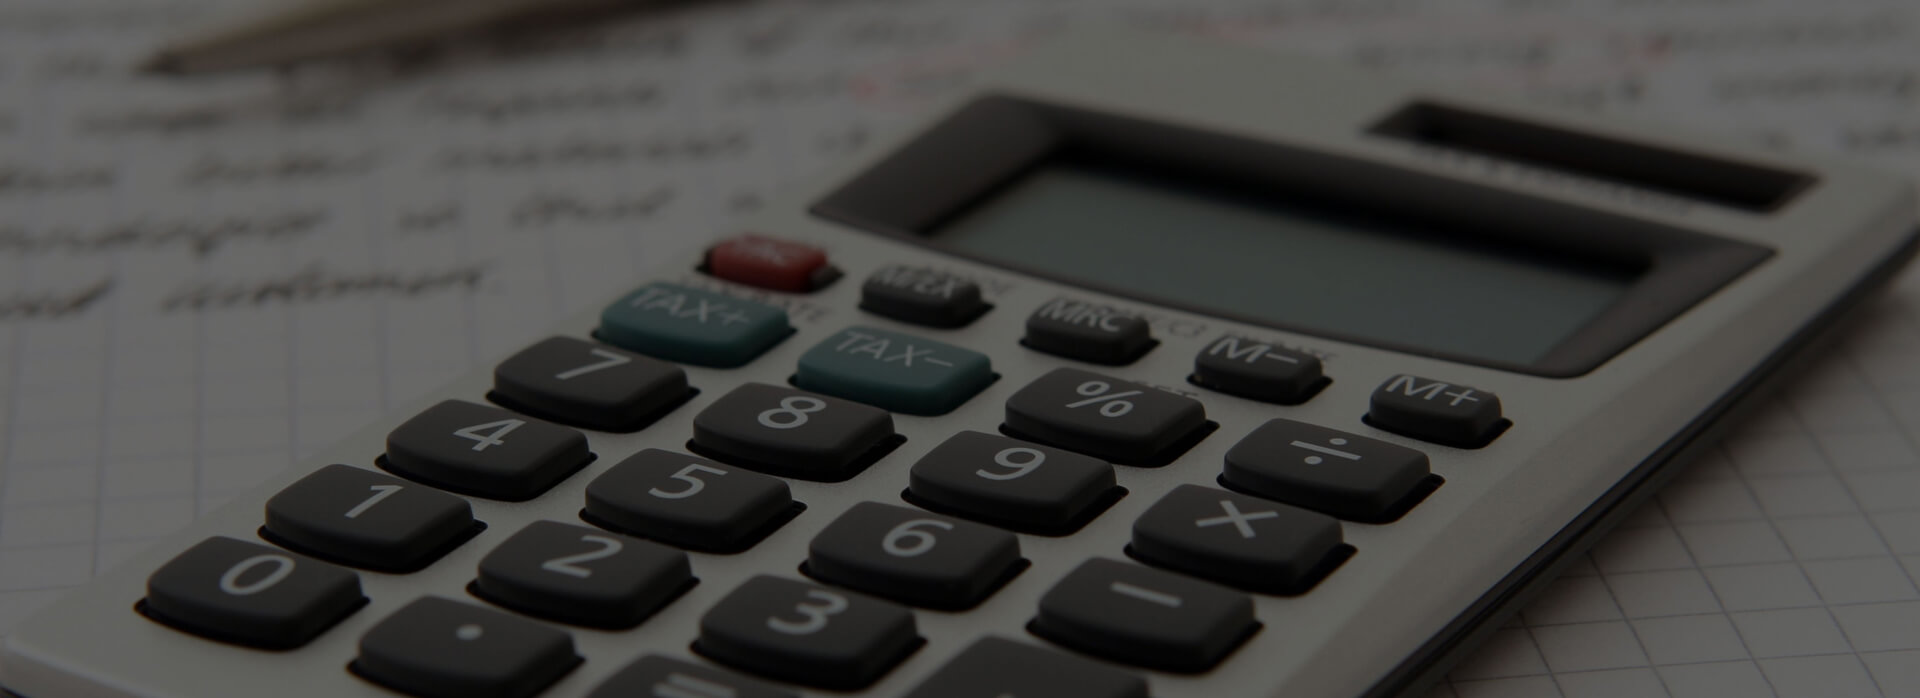 australian-tax-refund-calculator-get-your-estimate-now